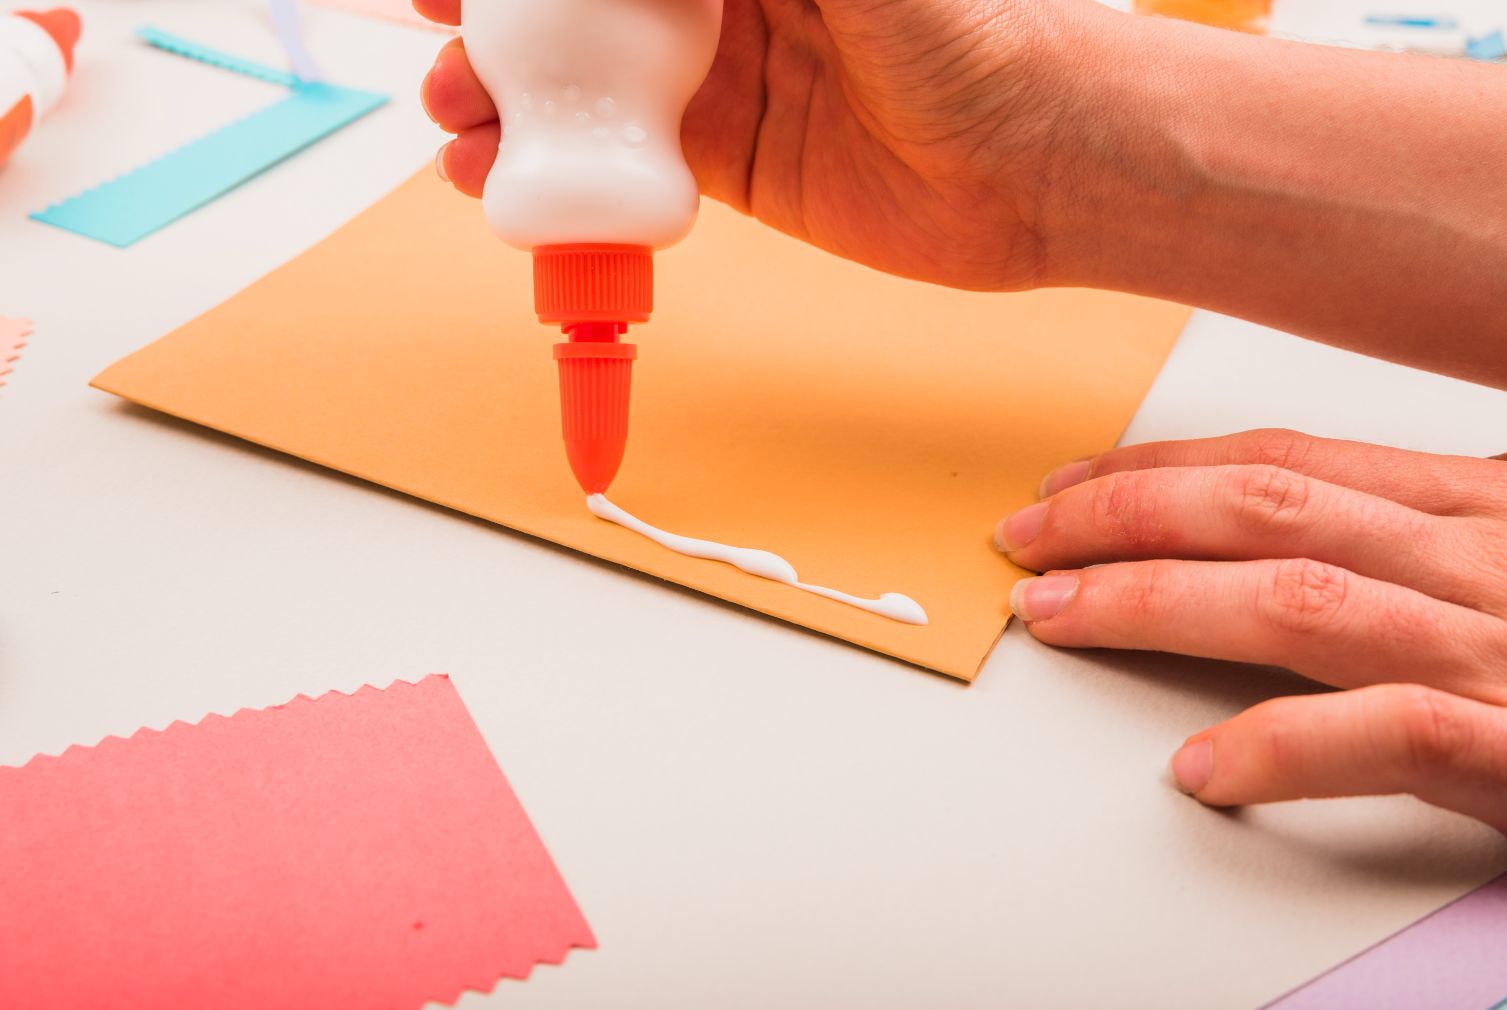 A hand applying super glue glue on paper